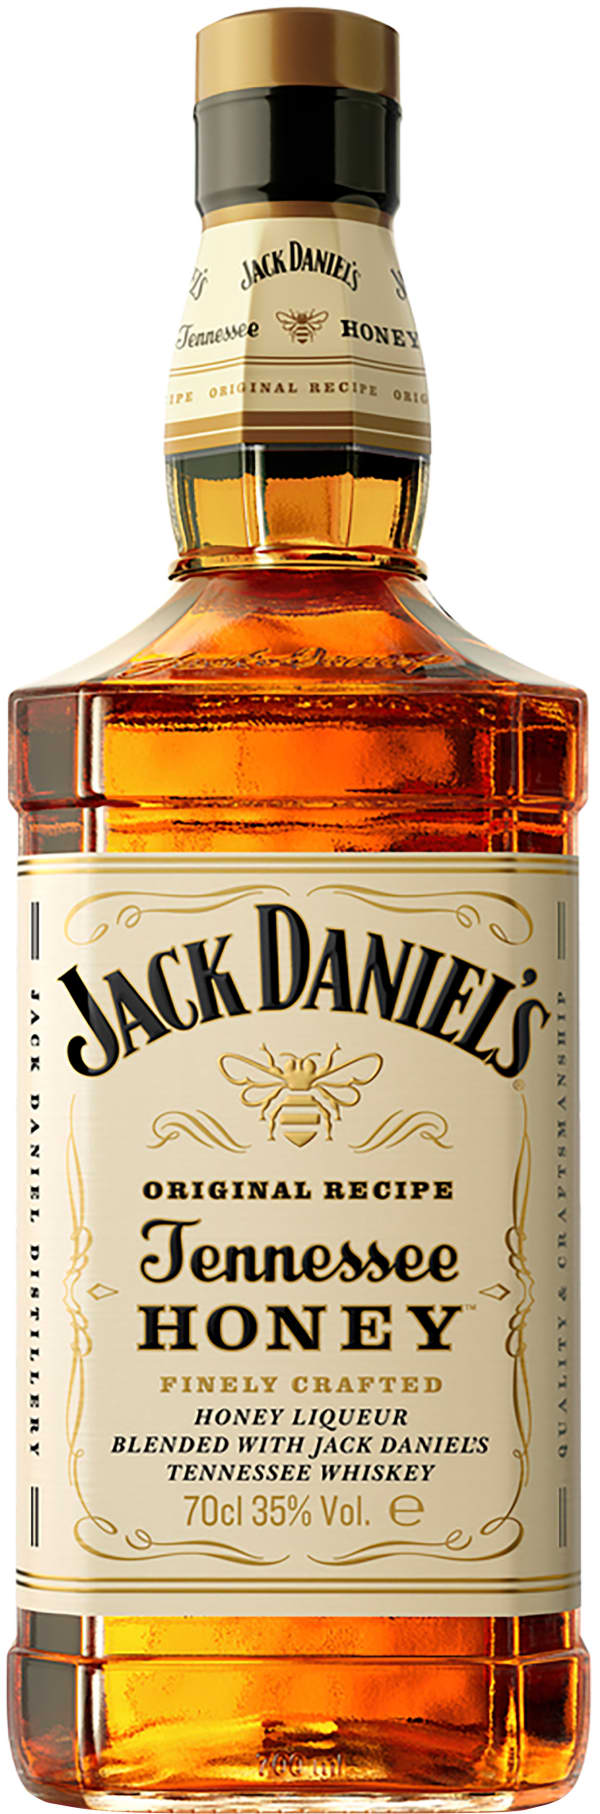 Jack Daniel's Tennessee Honey |